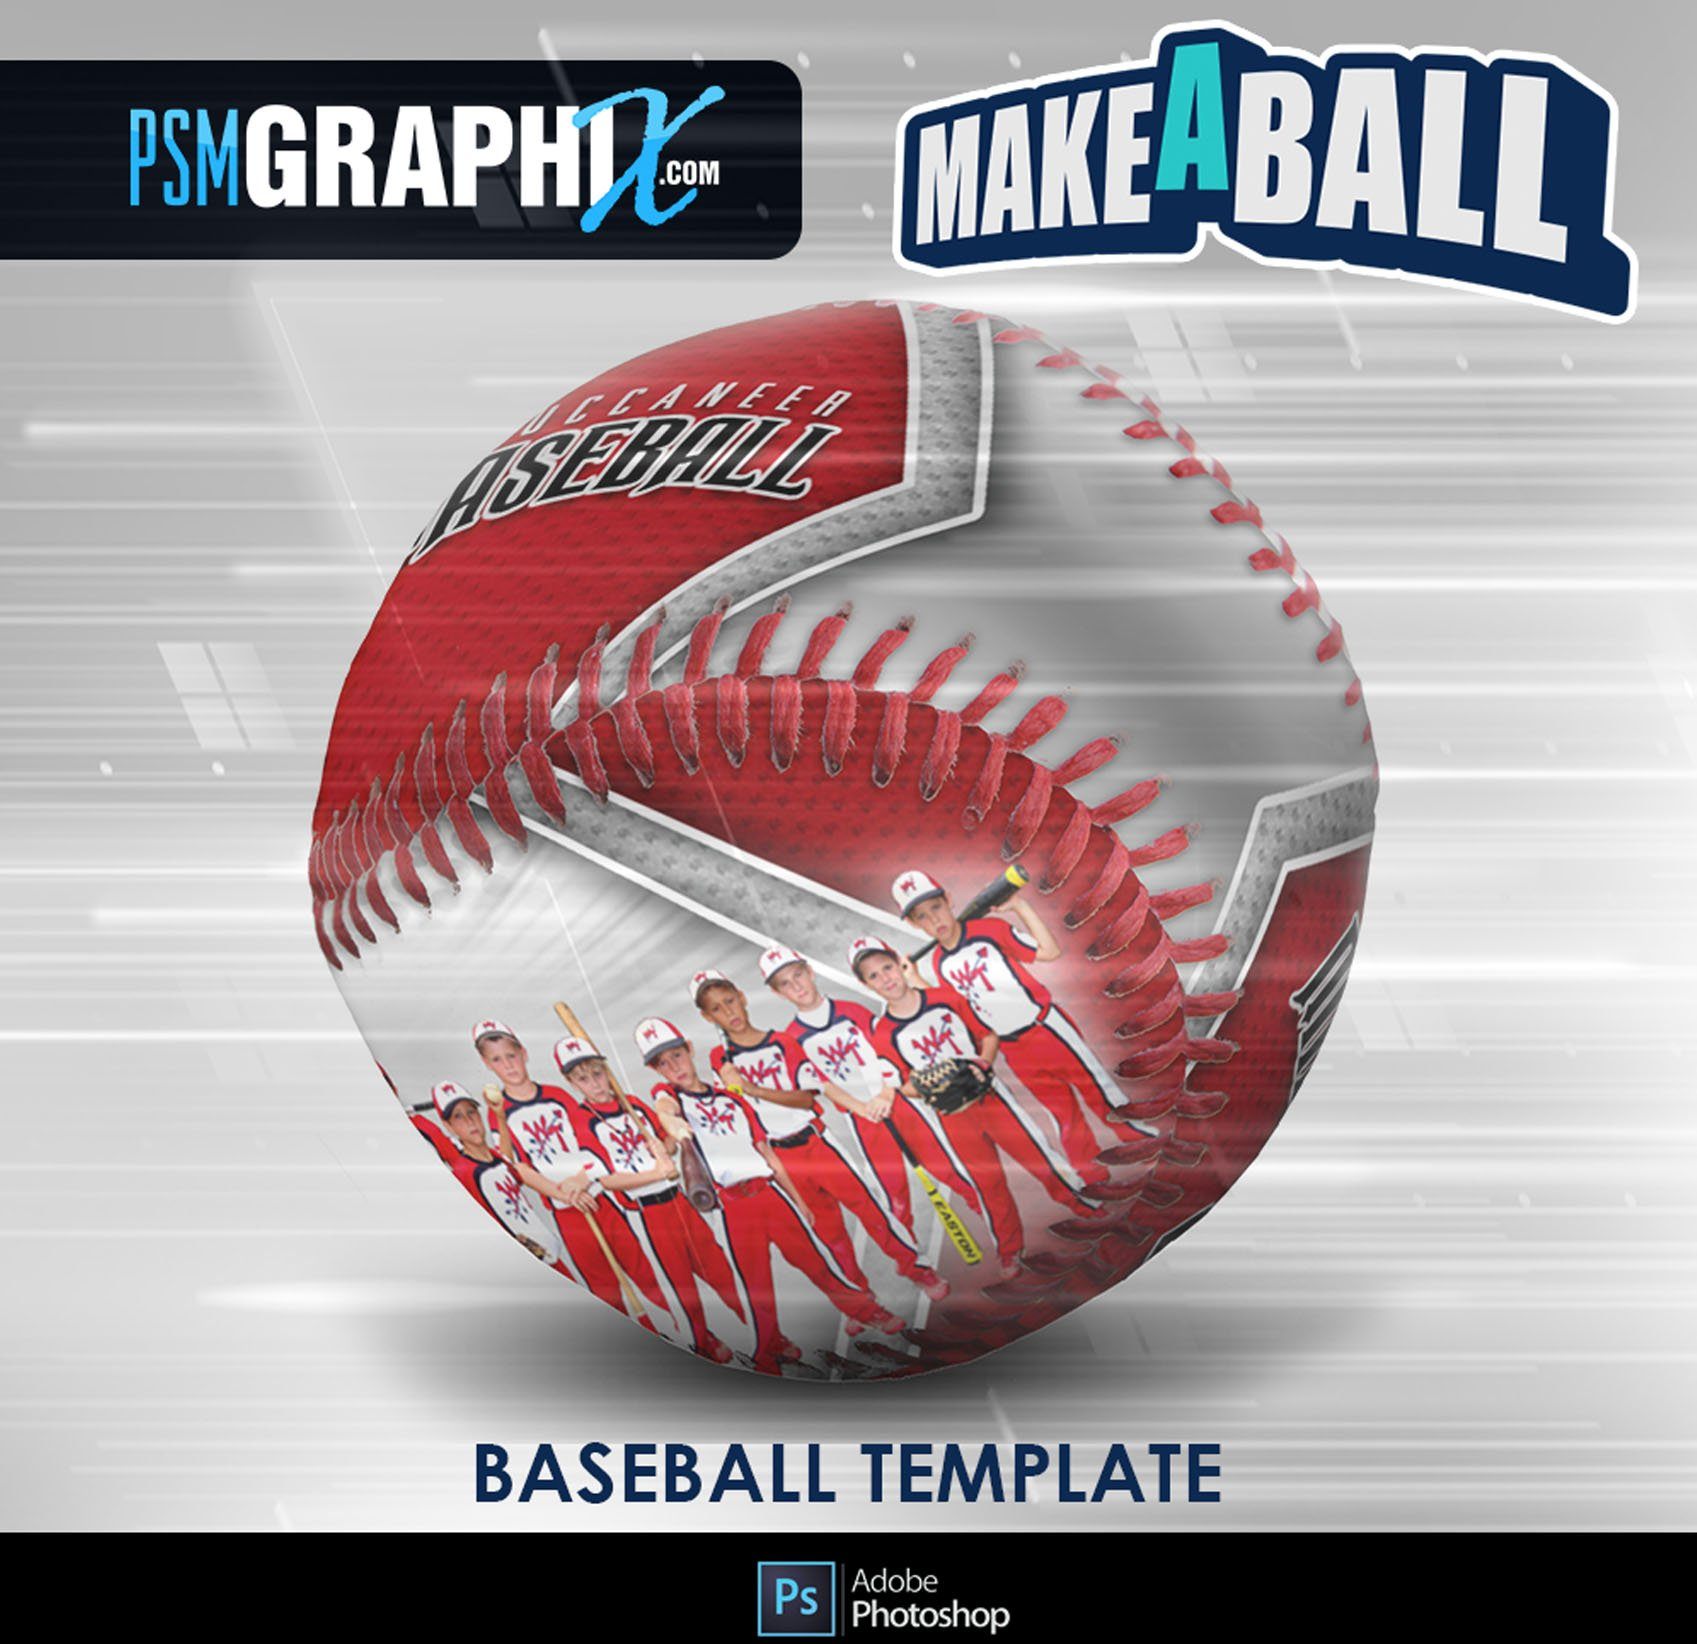 Superstar - V.1 - Baseball - Make-A-Ball Photoshop Template-Photoshop Template - PSMGraphix